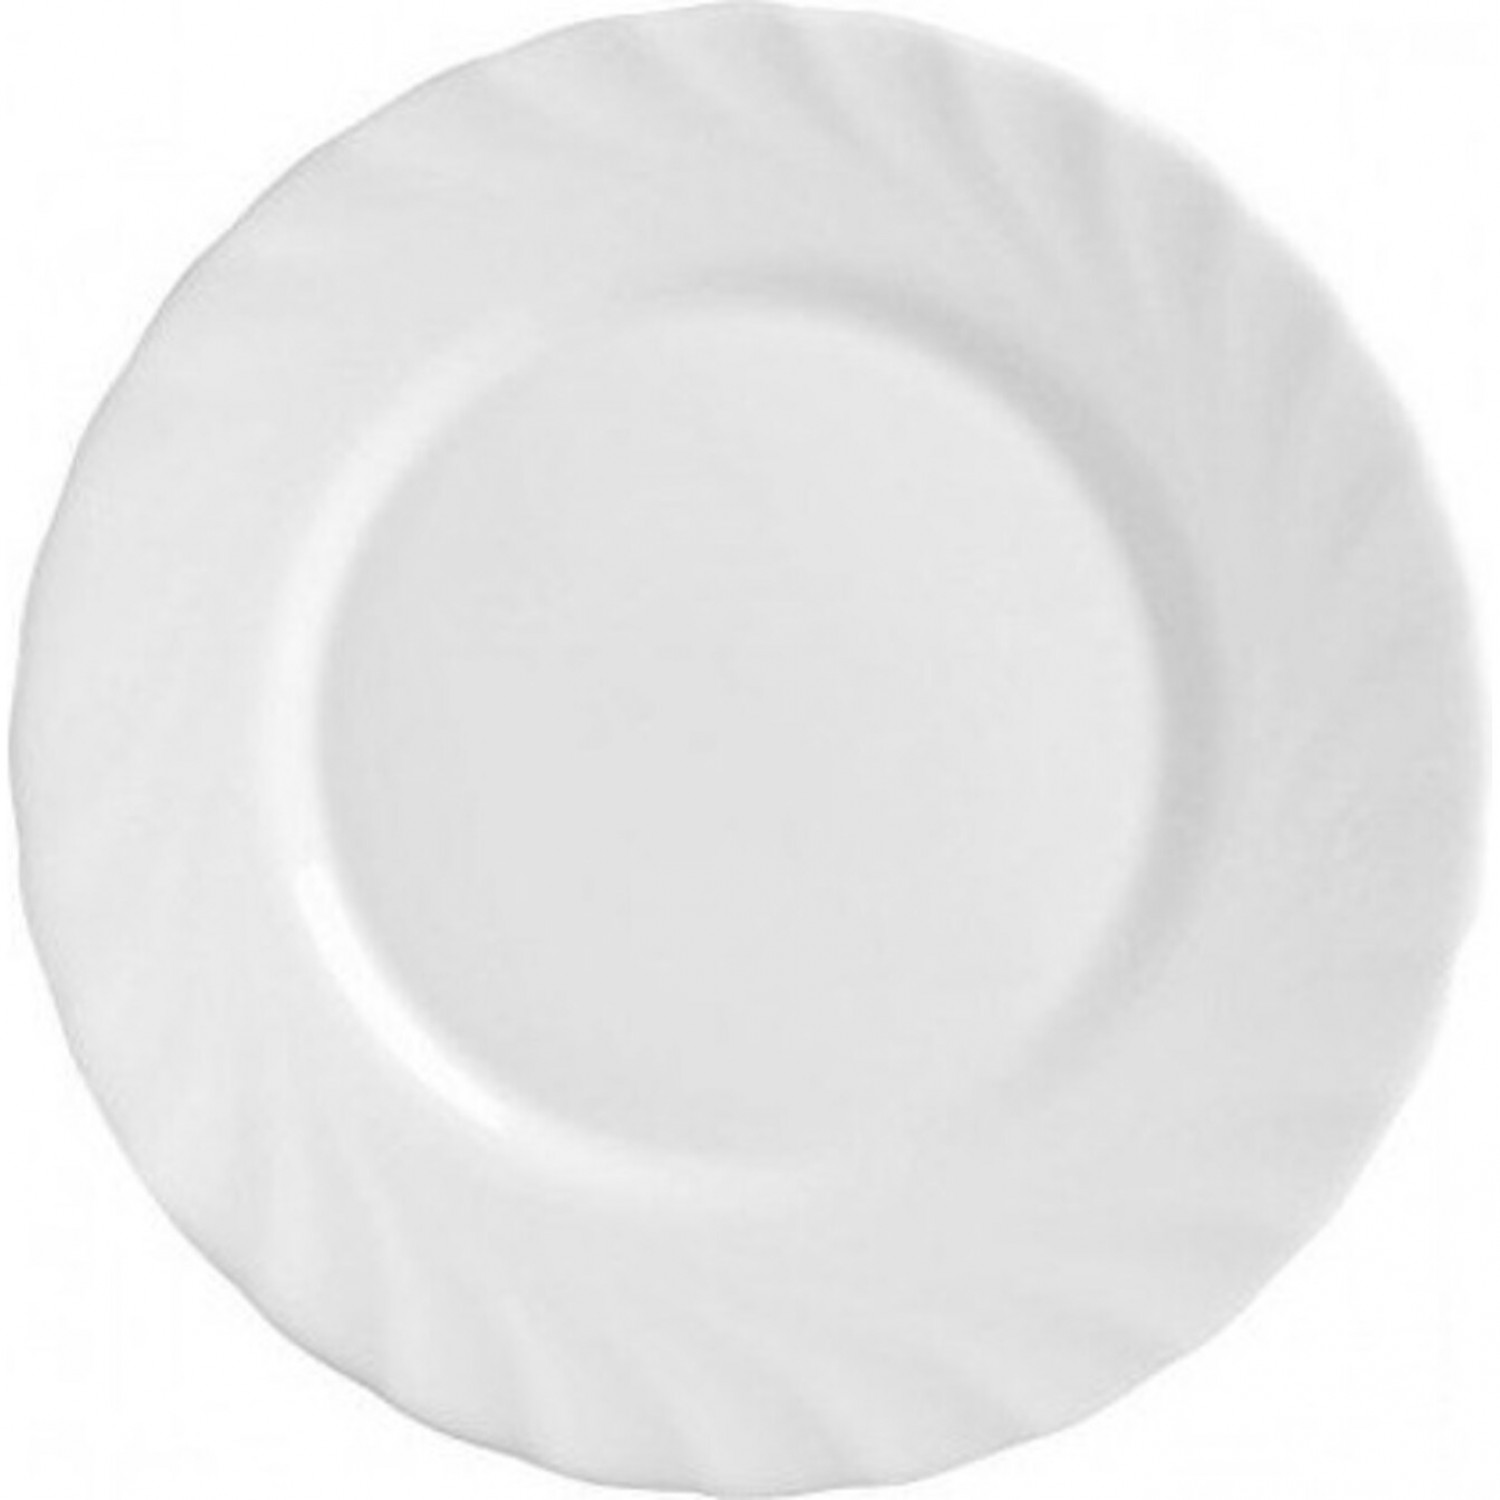 Тарелка обеденная ТРИАНОН 24,5см LUMINARC N3645 тарелка пирожковая luminarc трианон d7501 09415 15 5см